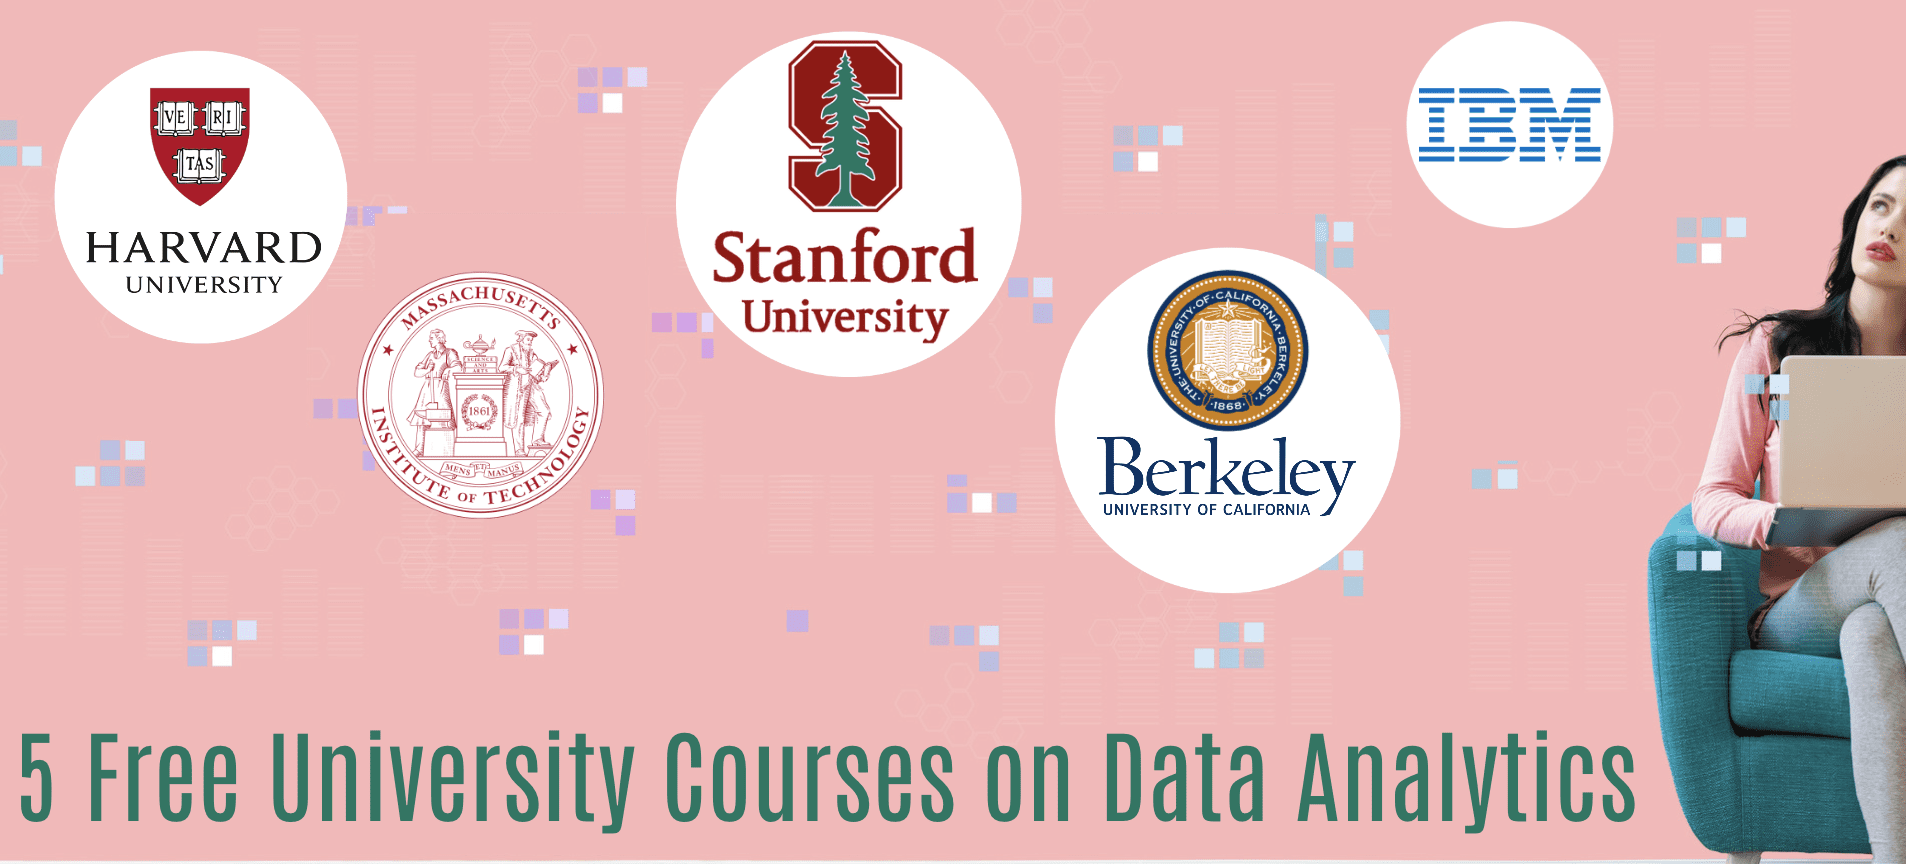 5 cursos universitarios gratuitos sobre análisis de datos